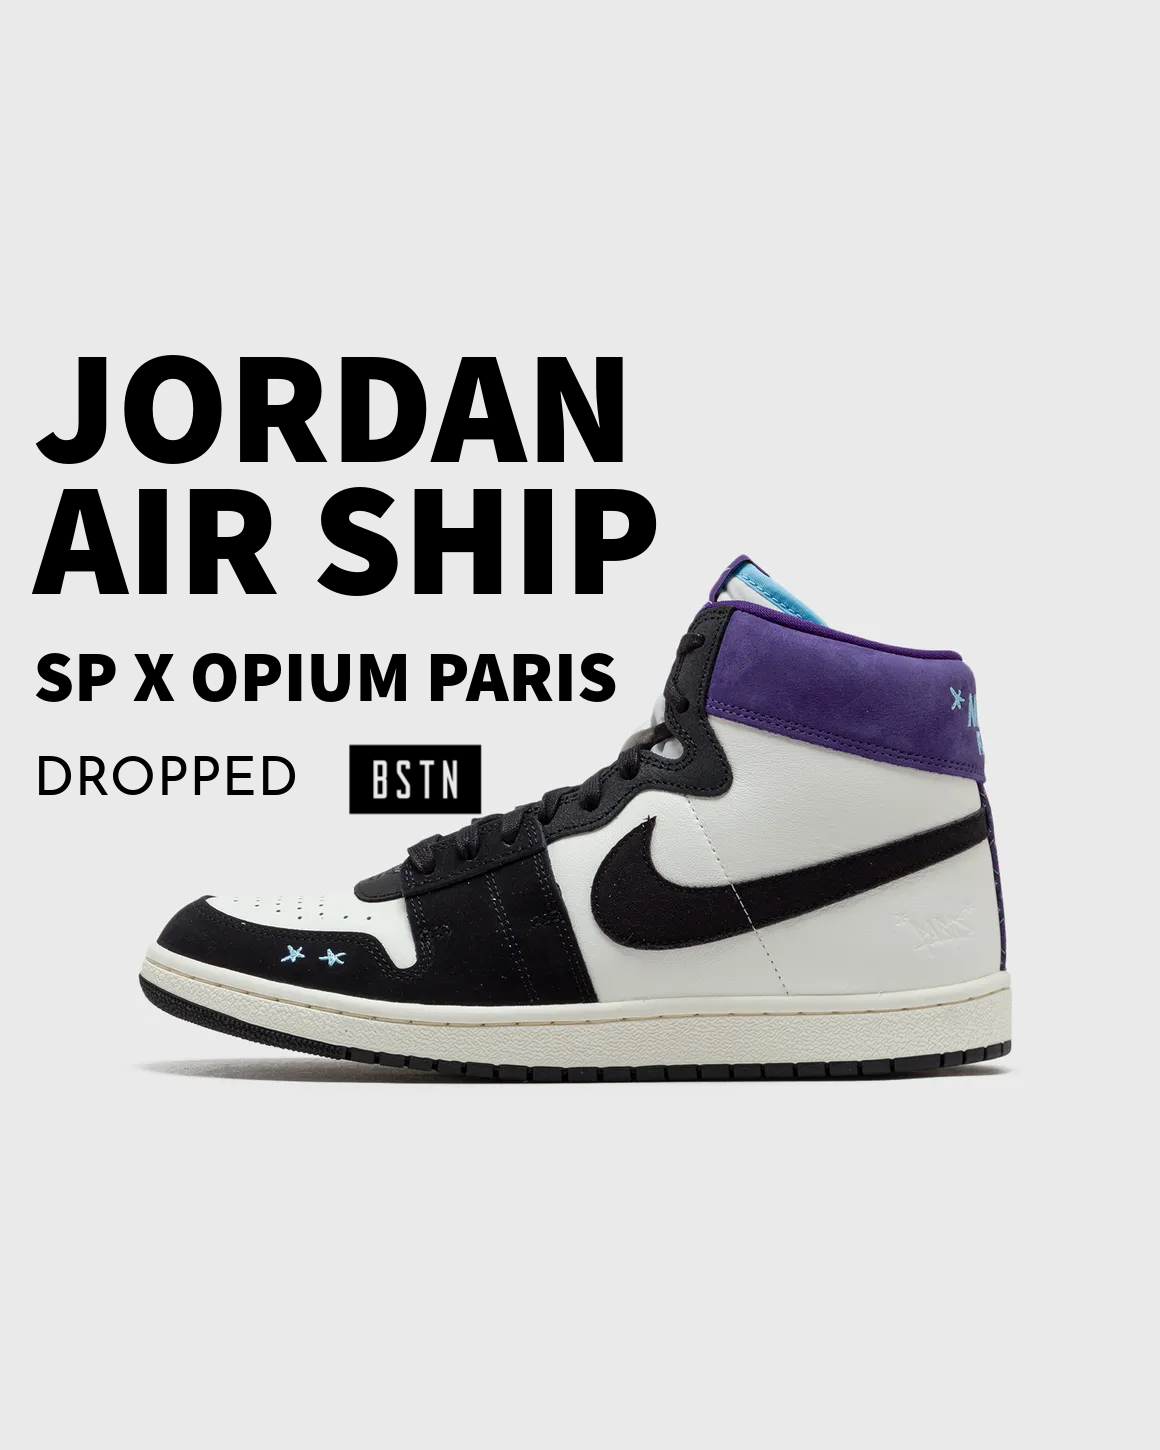 JORDAN AIR SHIP SP X OPIUM PARIS